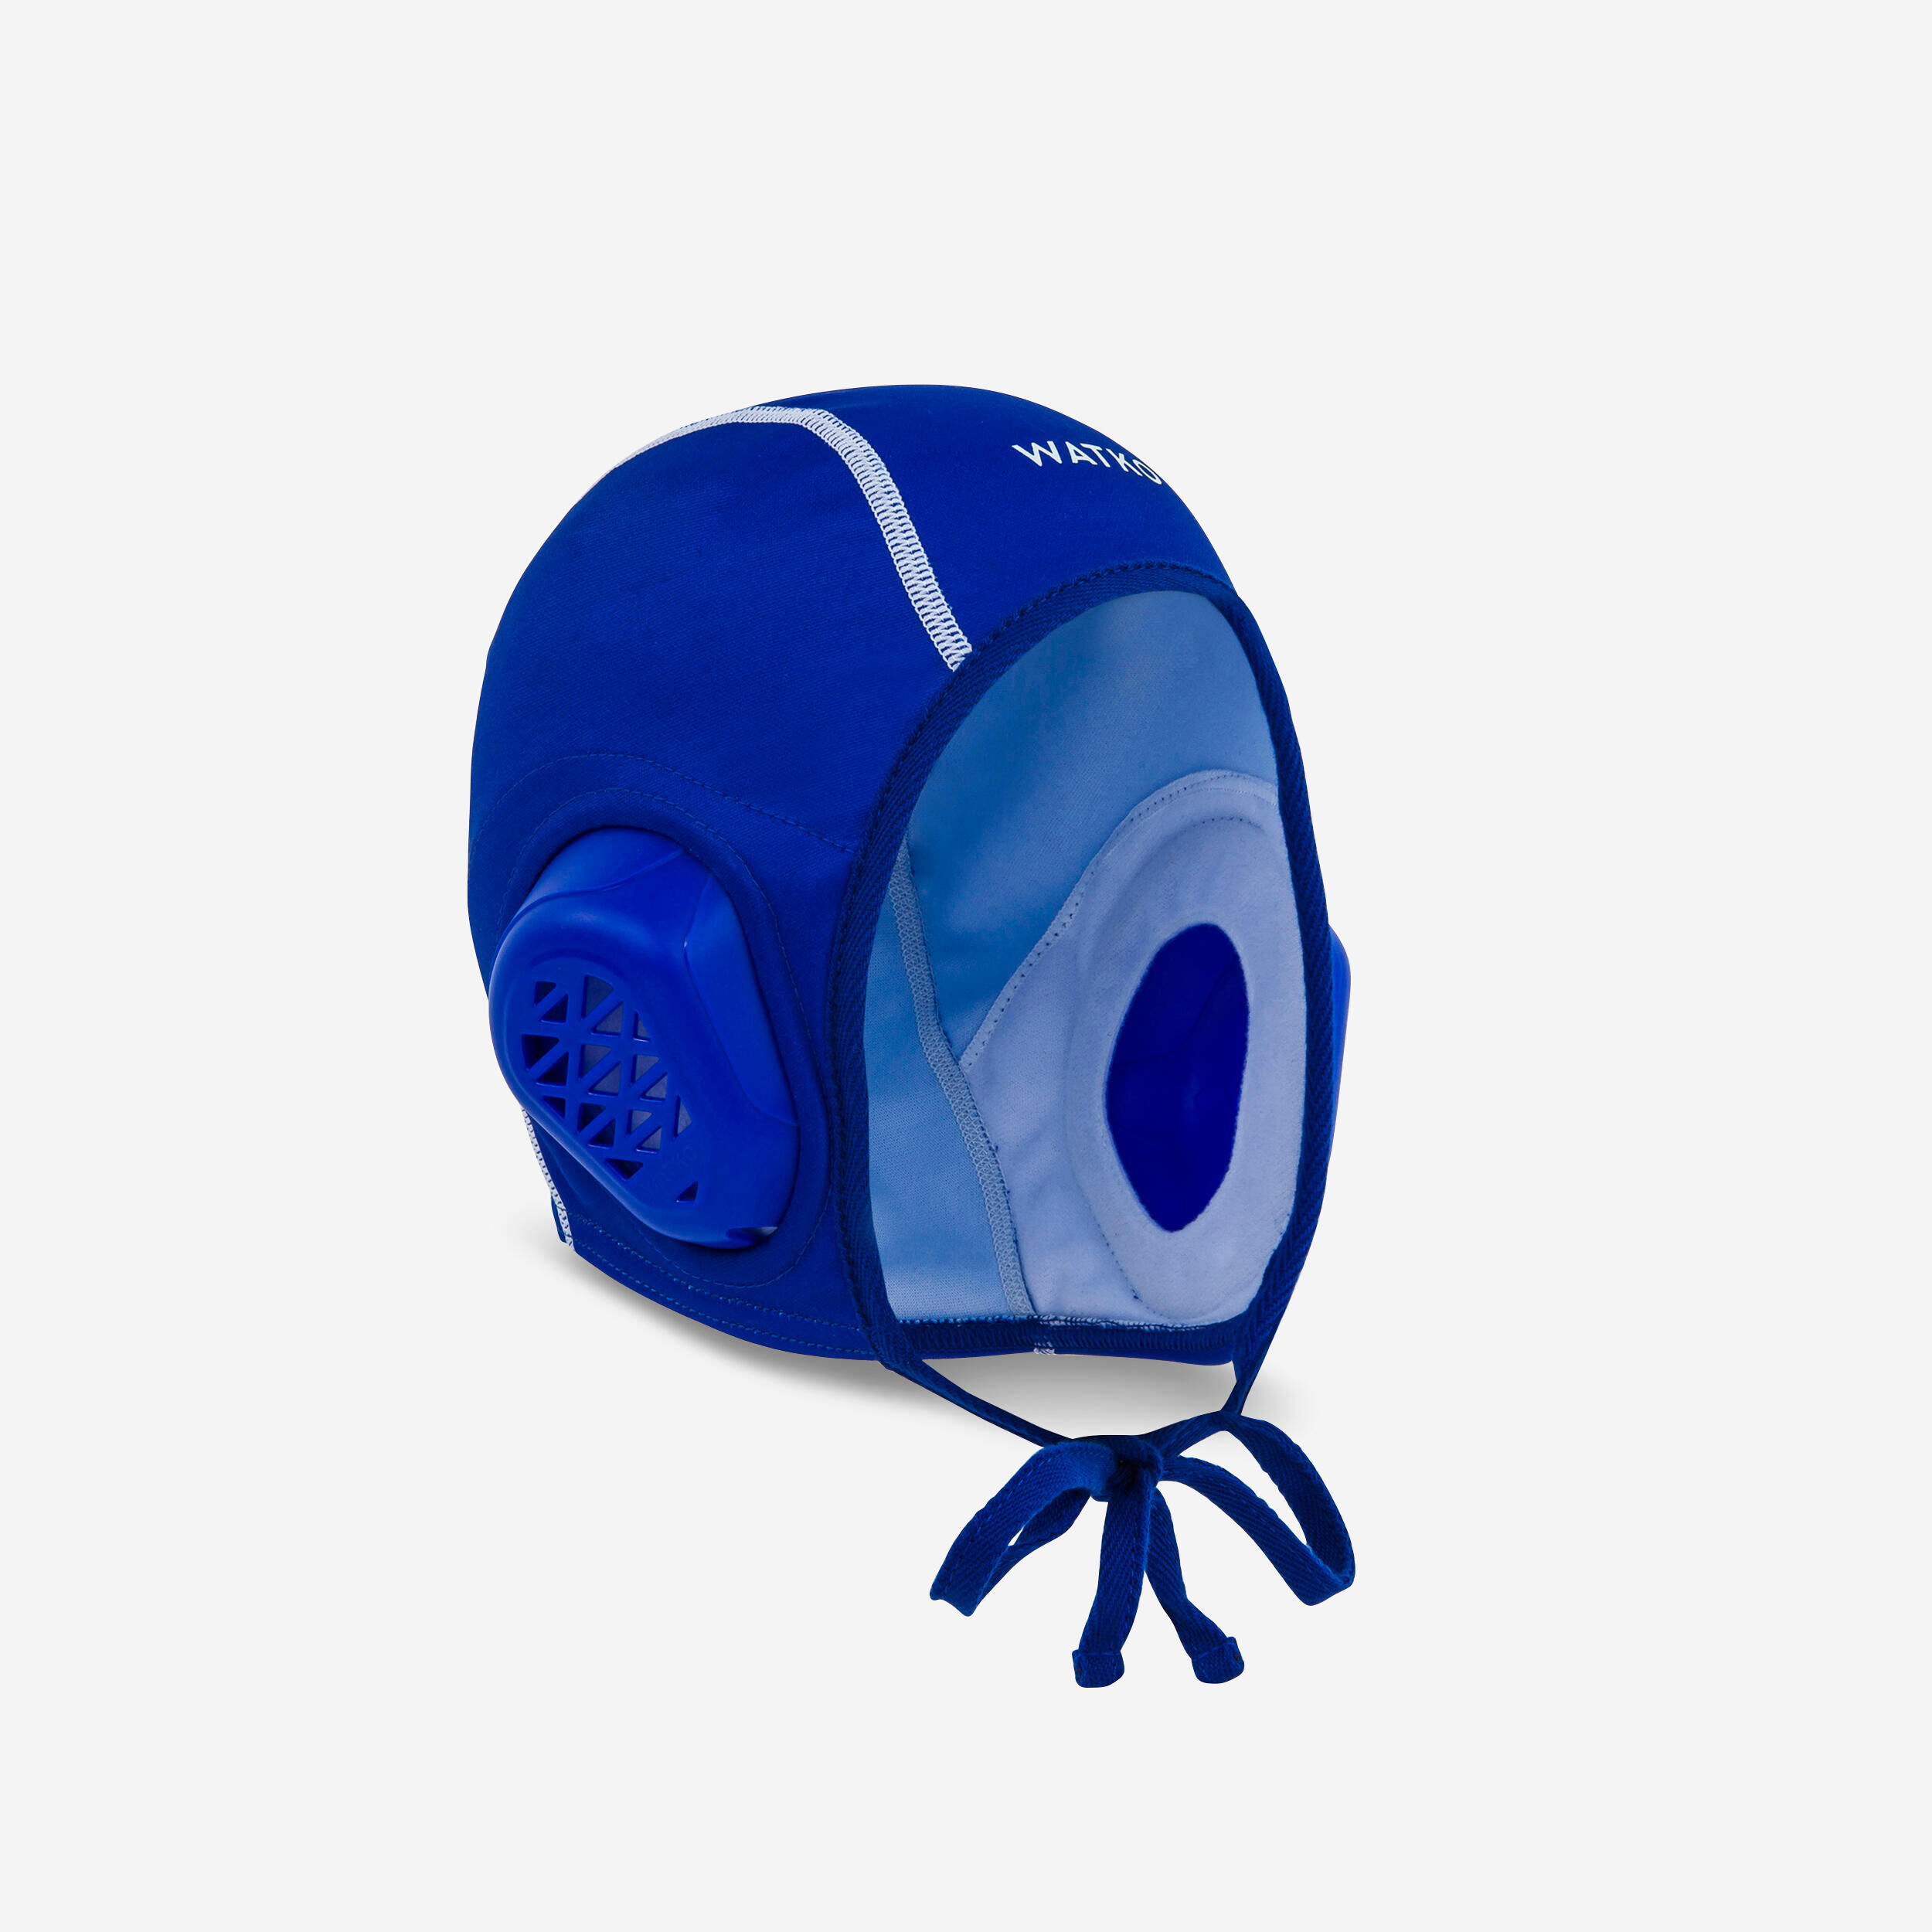 WATKO ADULT'S WATER POLO CAP WP900 BLUE